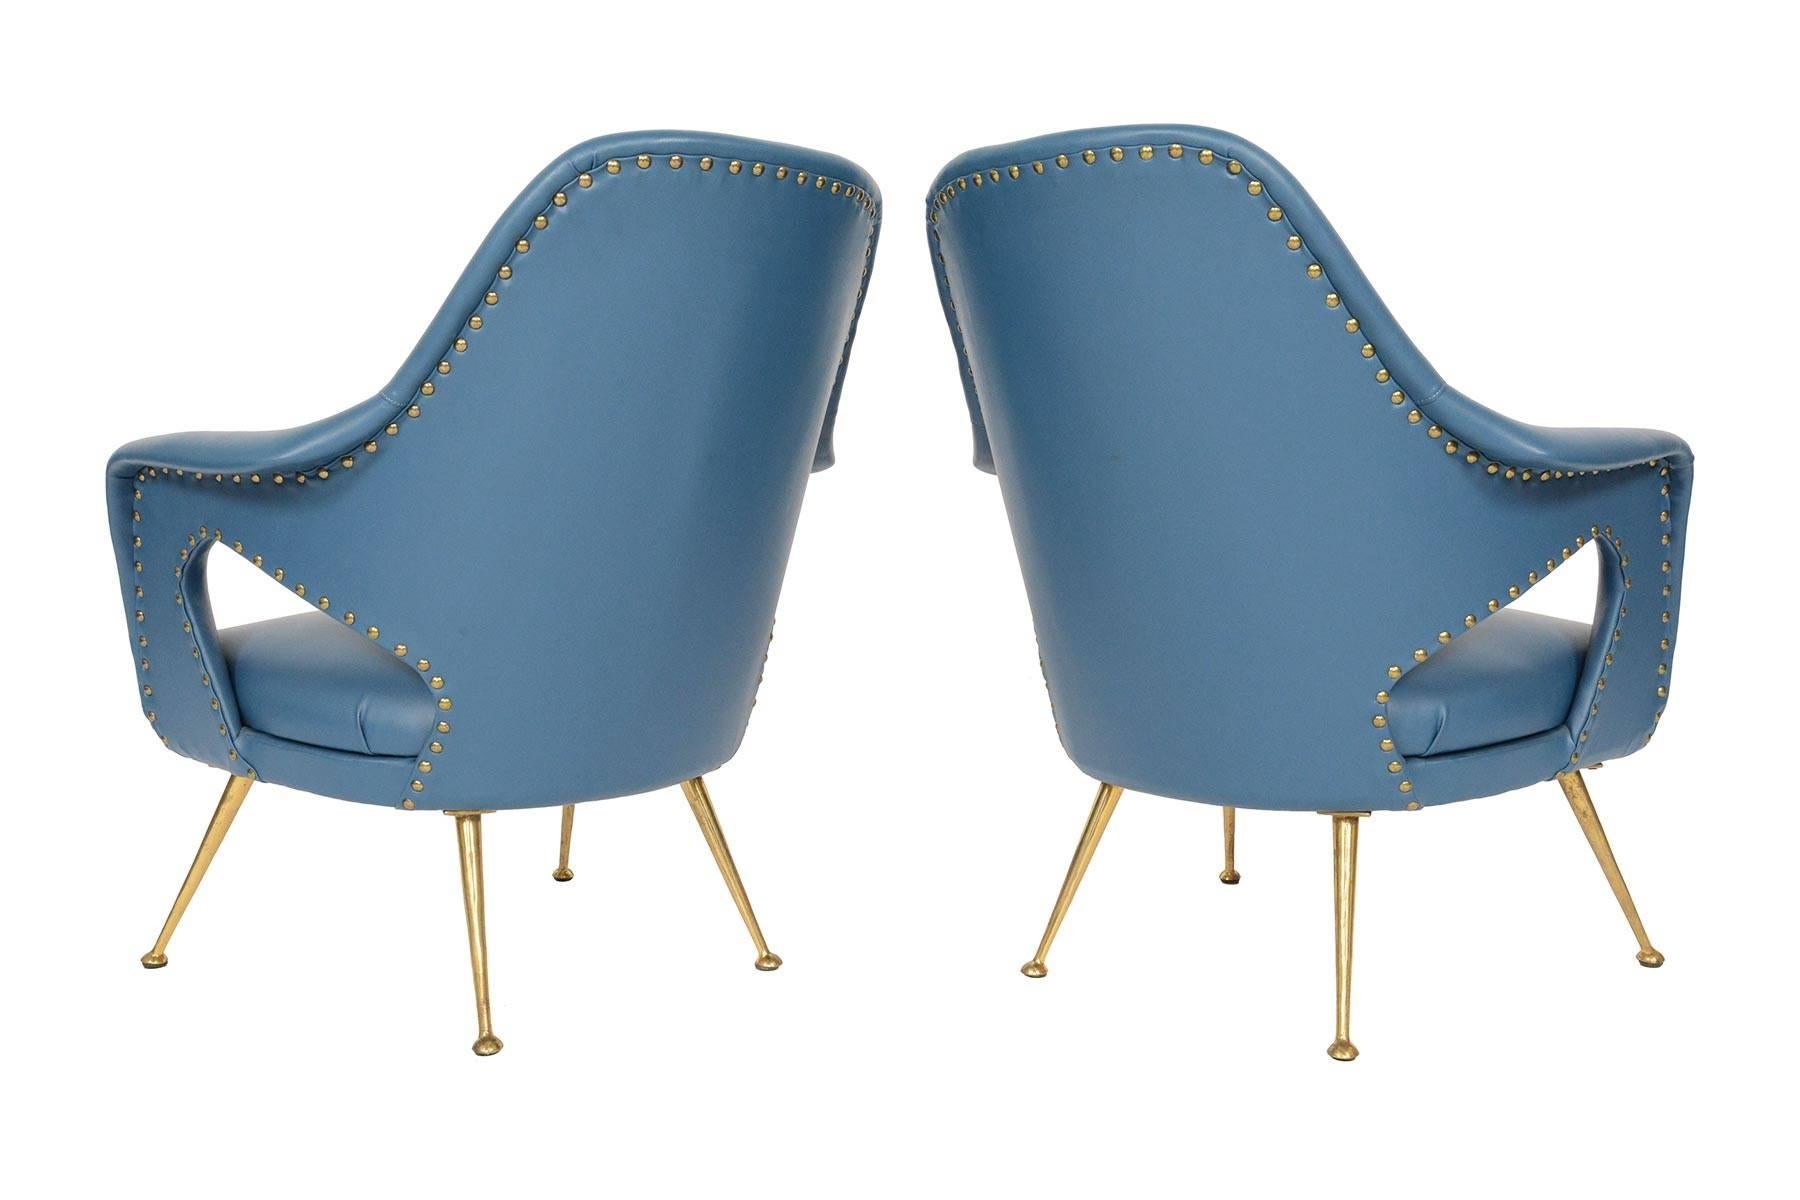 20th Century Pair of Italian Modern Lounge Chairs in Blue Vinyl